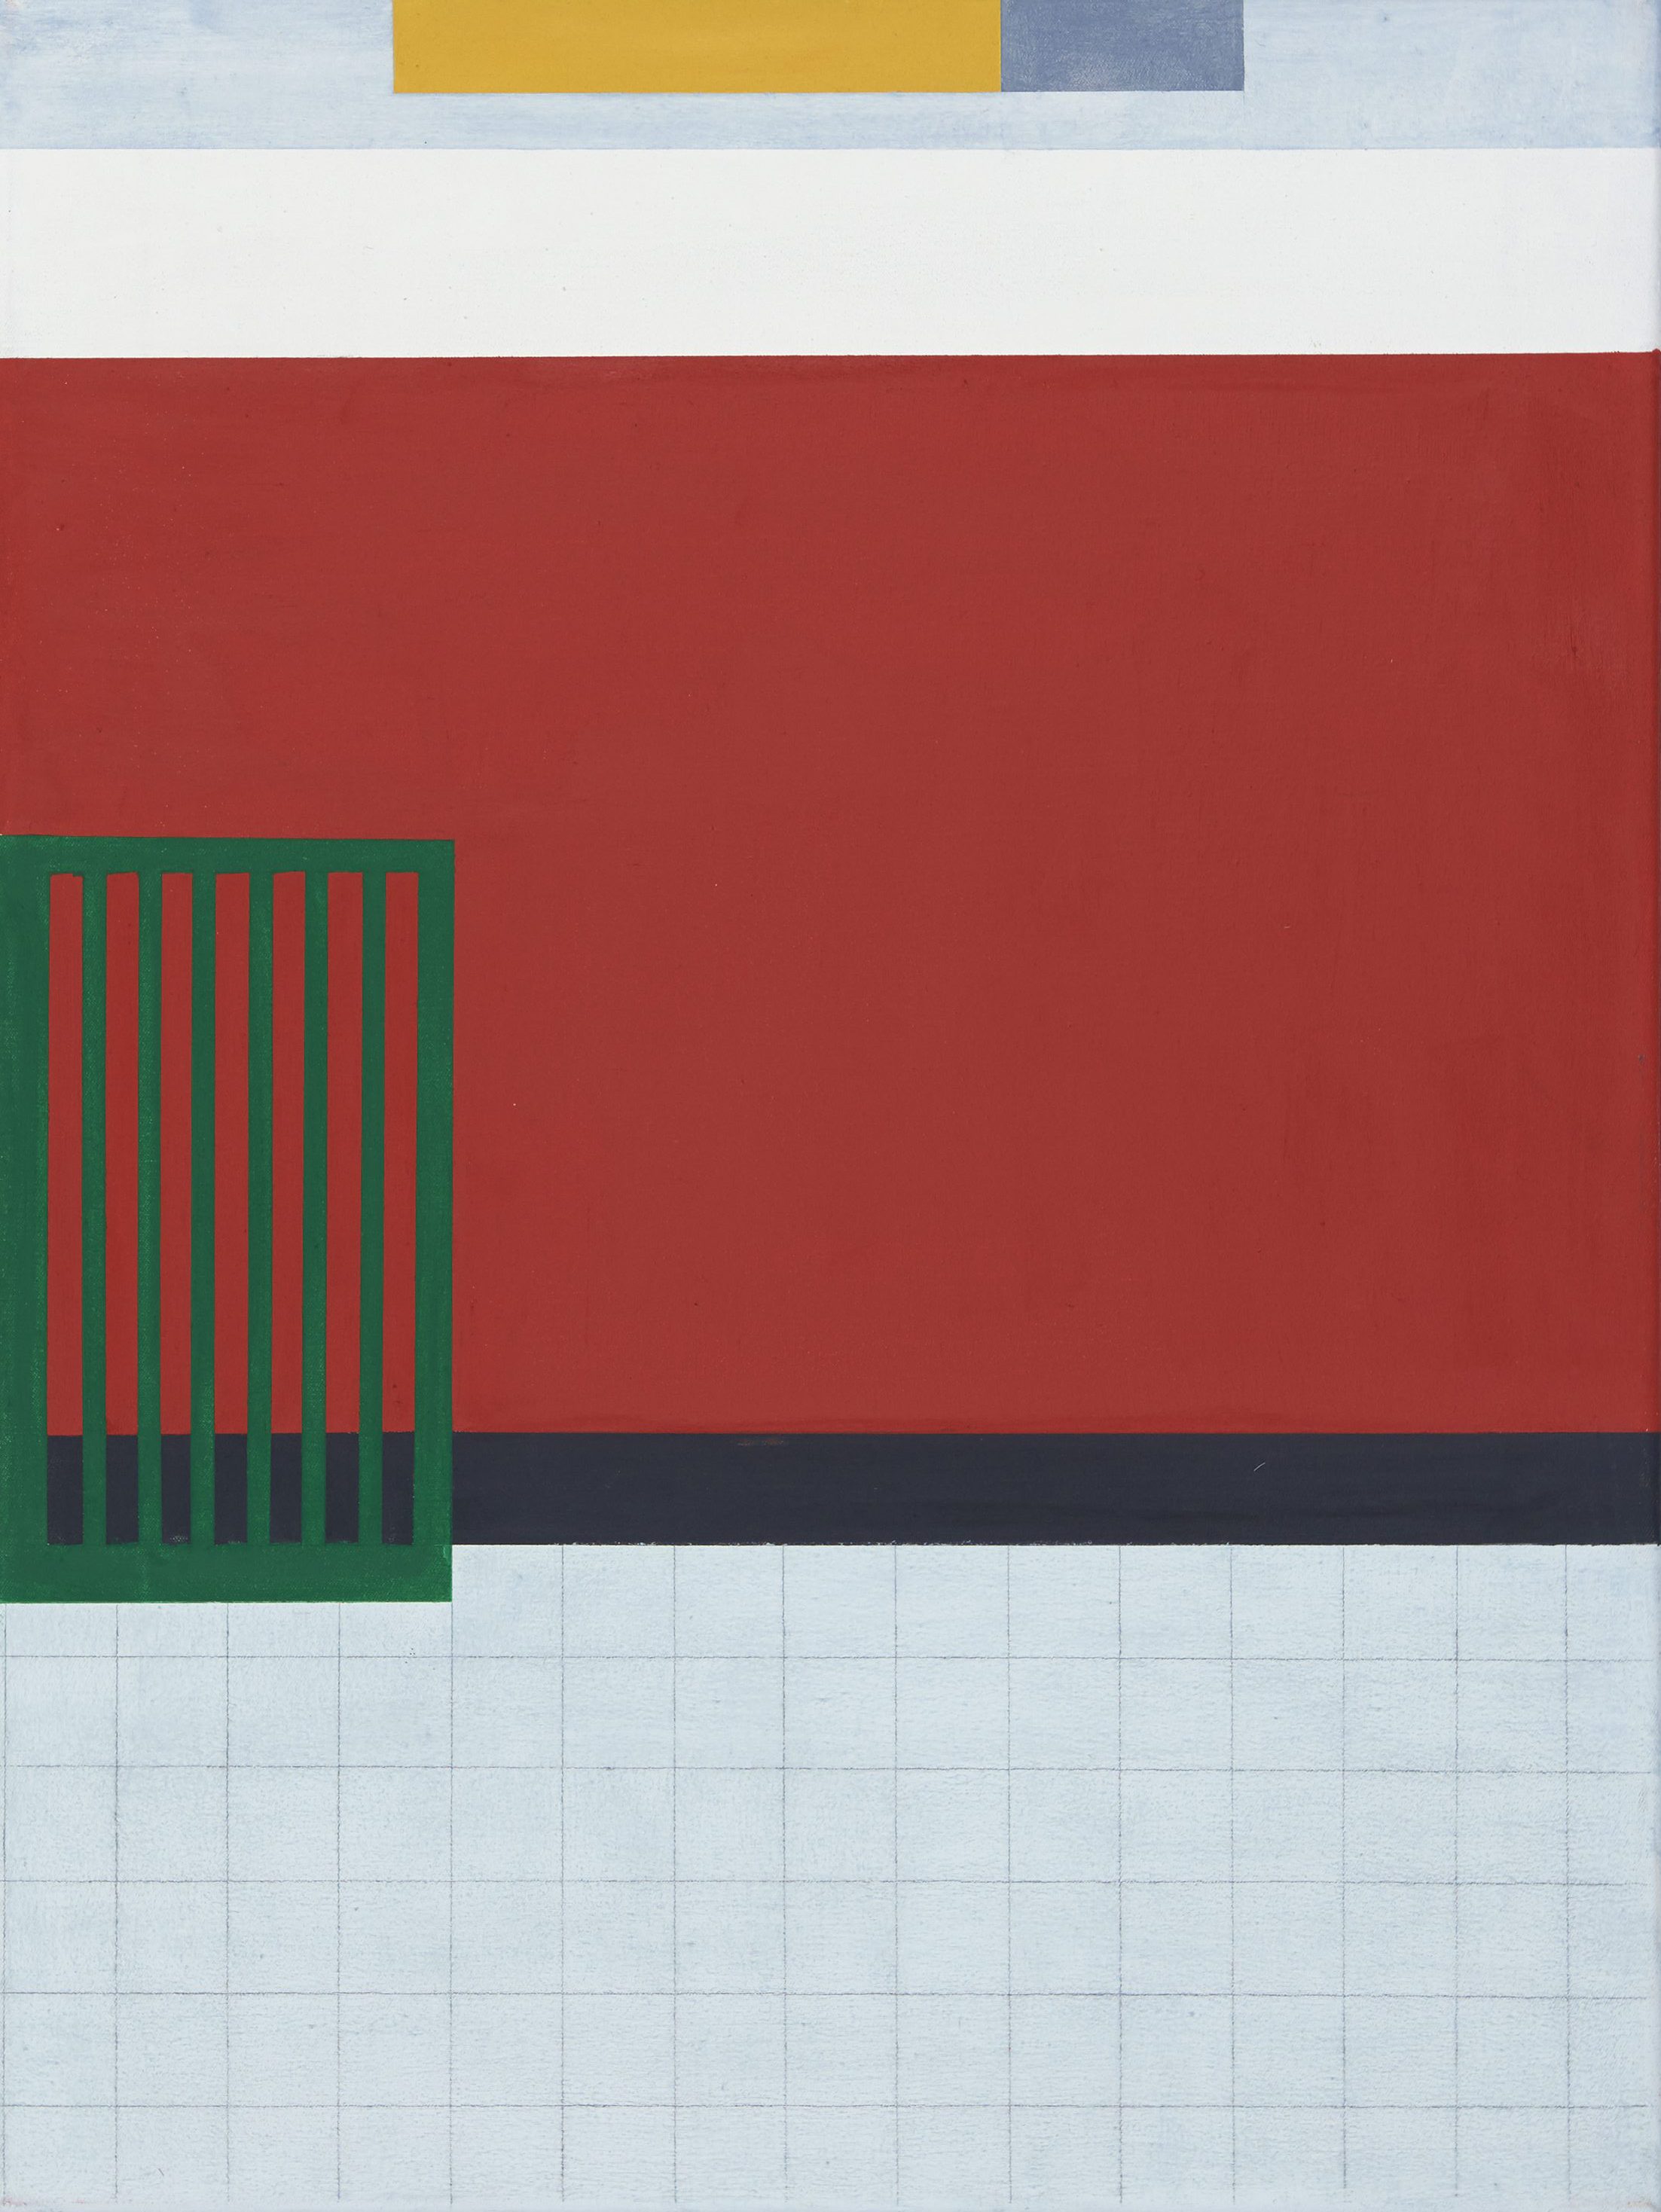 Ferbelliner Platz III, 2015, 60 x 45 cm, Öl auf Leinwand / Oil on canvas